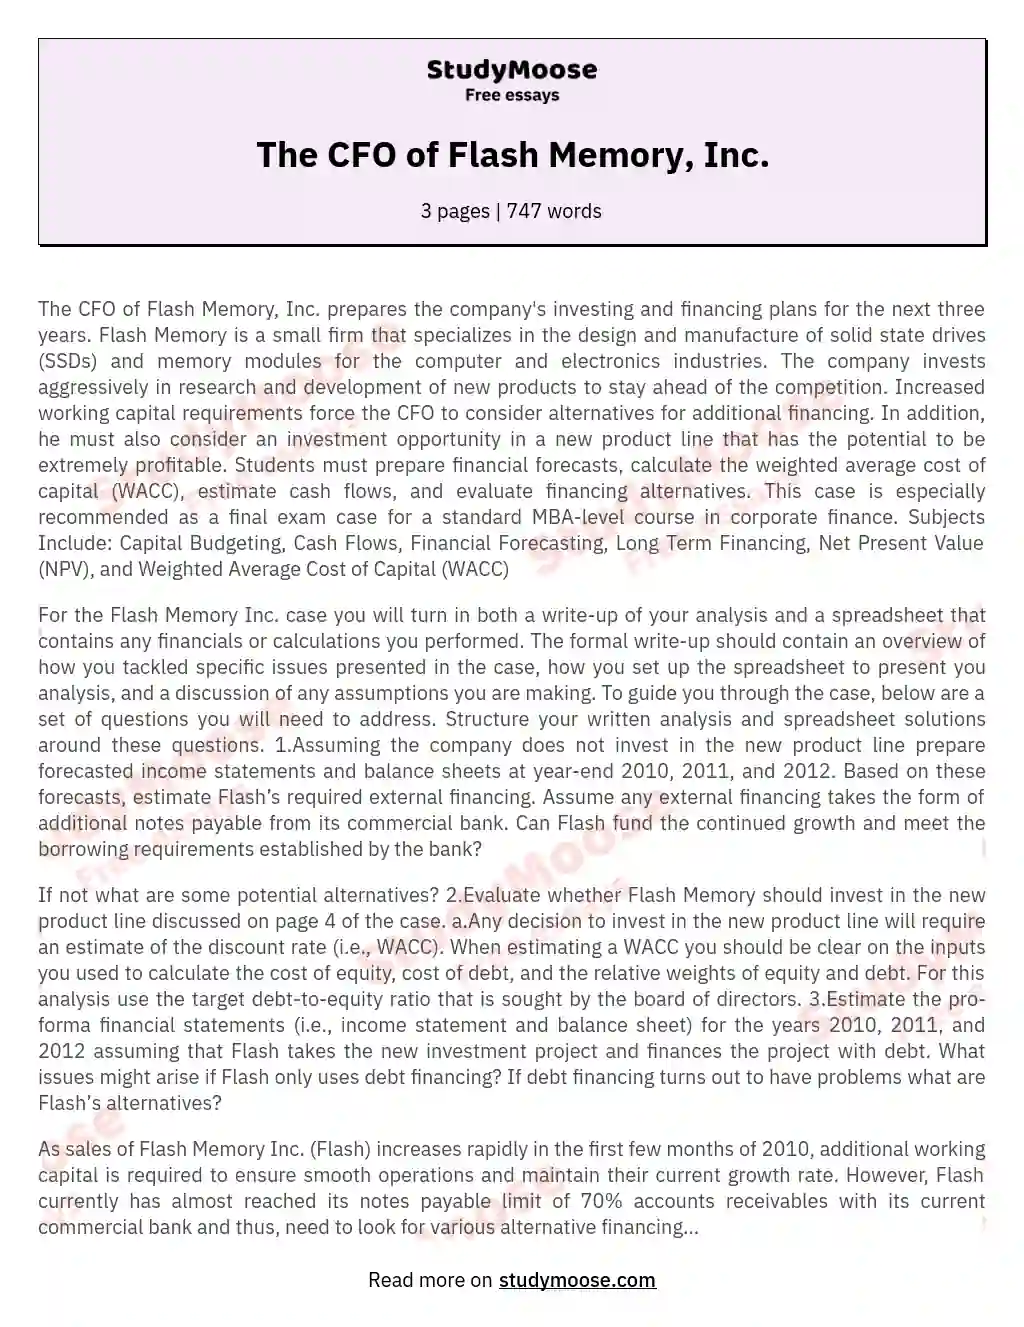 The CFO of Flash Memory, Inc. essay